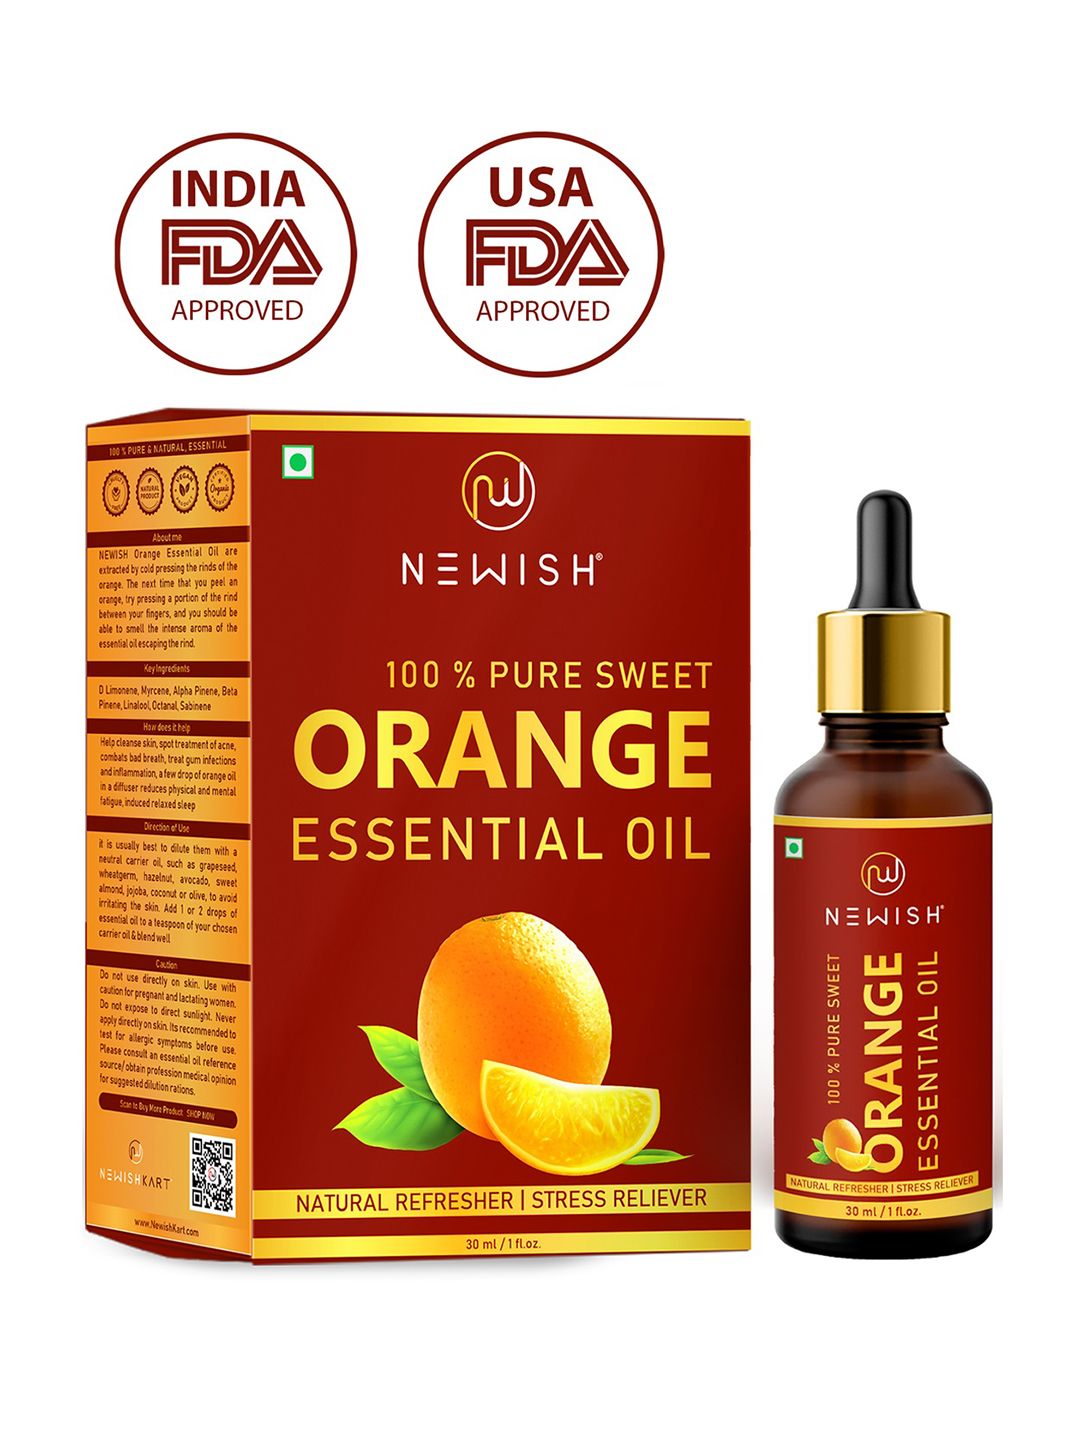 NEWISH Unisex Orange Essential Oil for Face, Skin, Aroma, Diffuser Cold Pressed 30ml Price in India